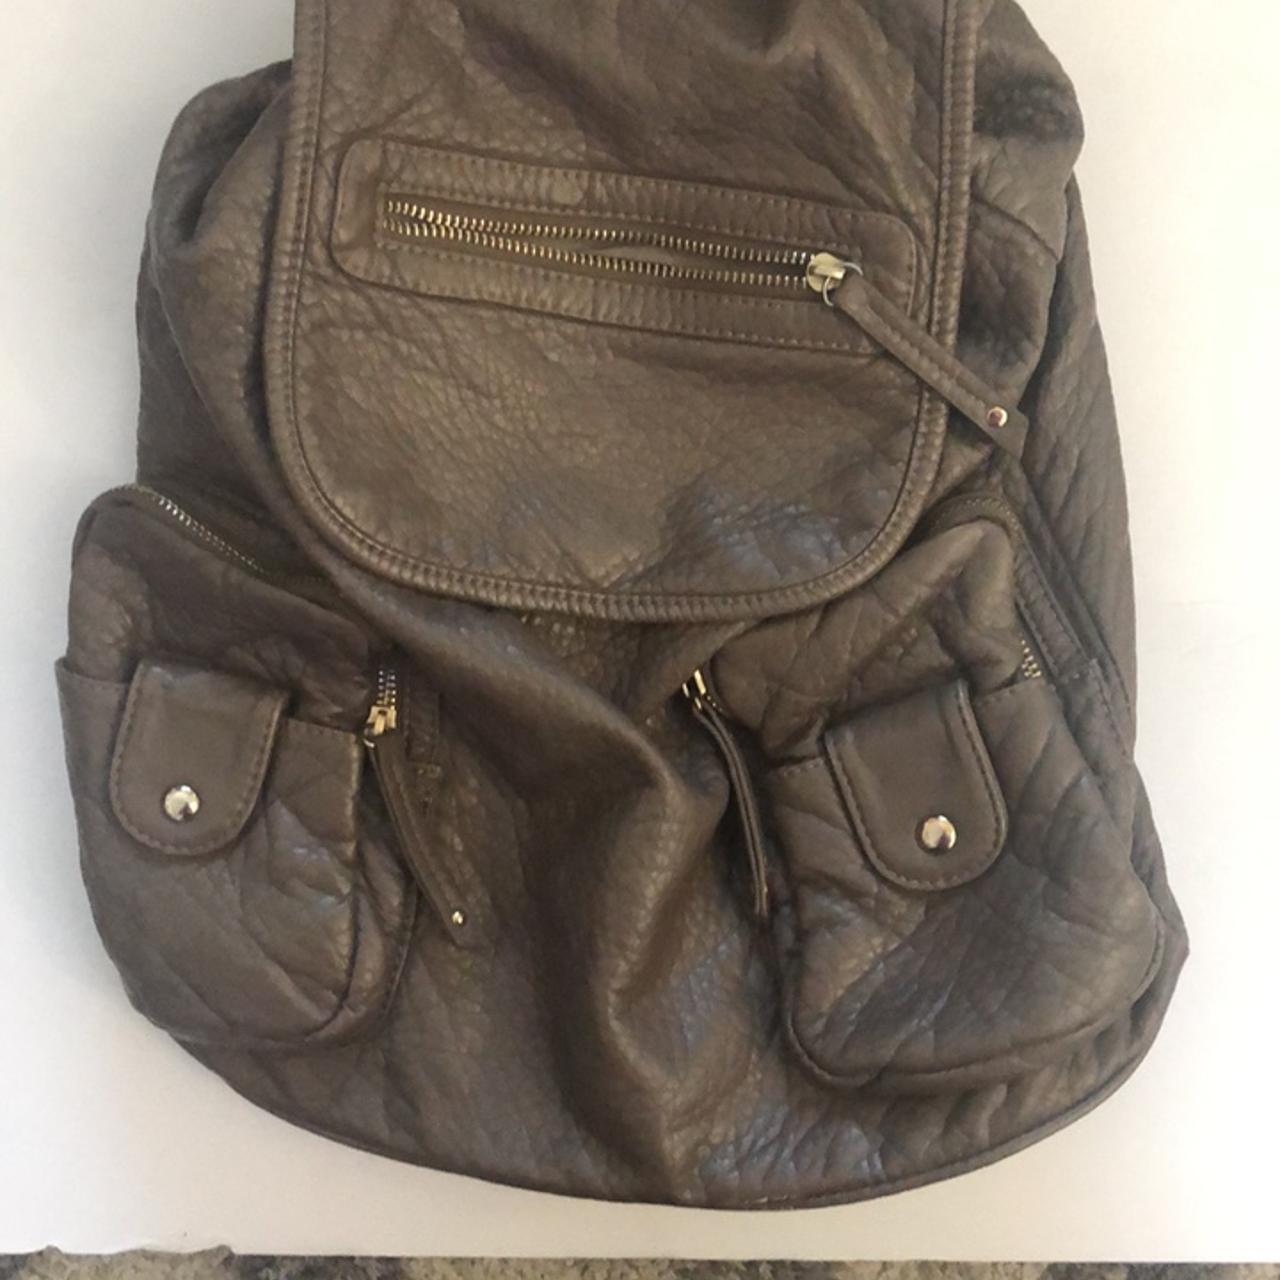 Under One Sky backpack/purse  Backpack purse, Purses, Backpacks